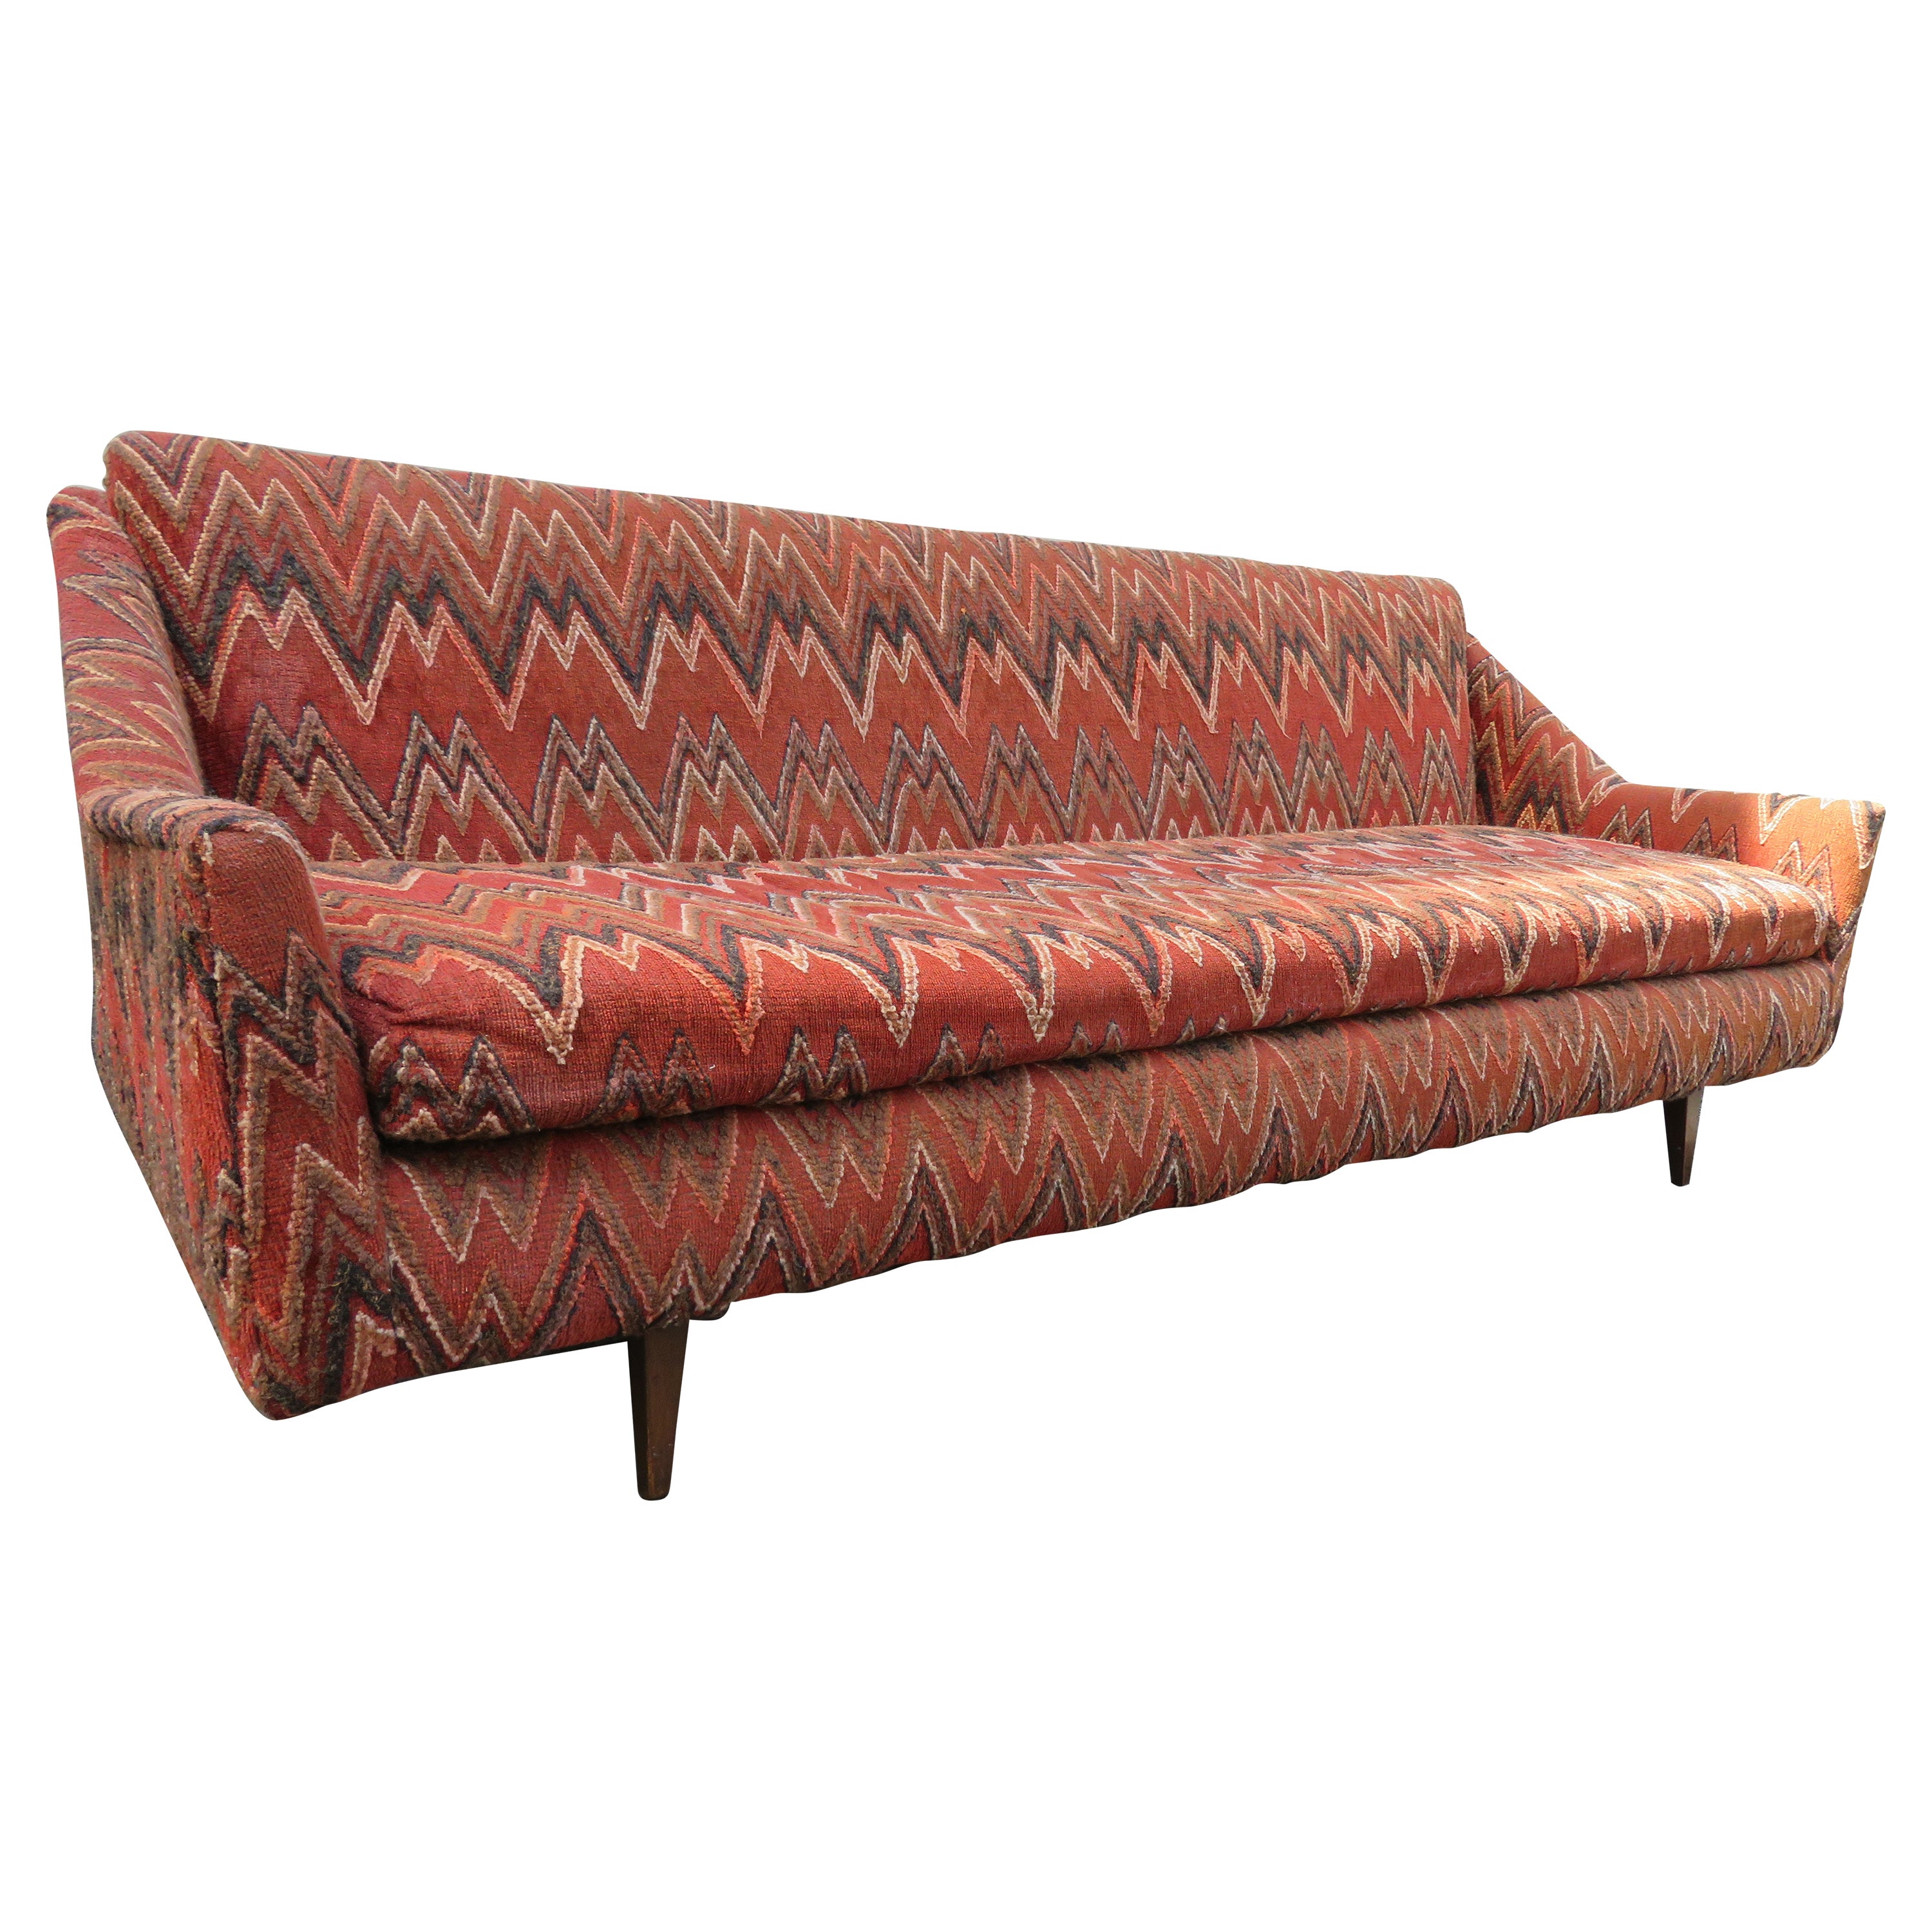 Wonderful Swedish Mid-Century Sofa Folke Ohlsson DUX Style, circa 60's For Sale